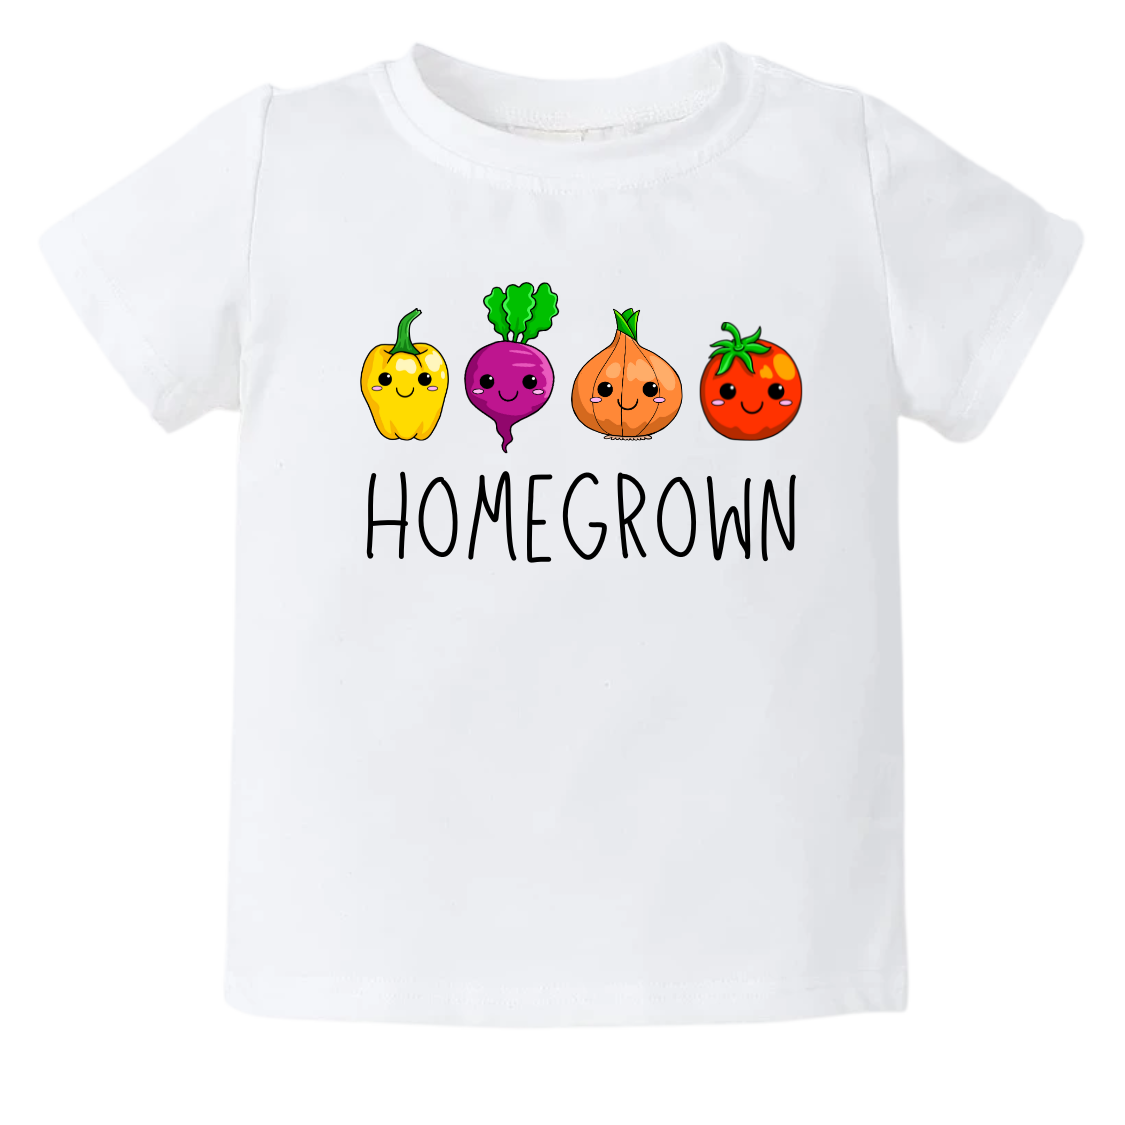 Homegrown kid tshirt - homegrown baby - cute veggies baby